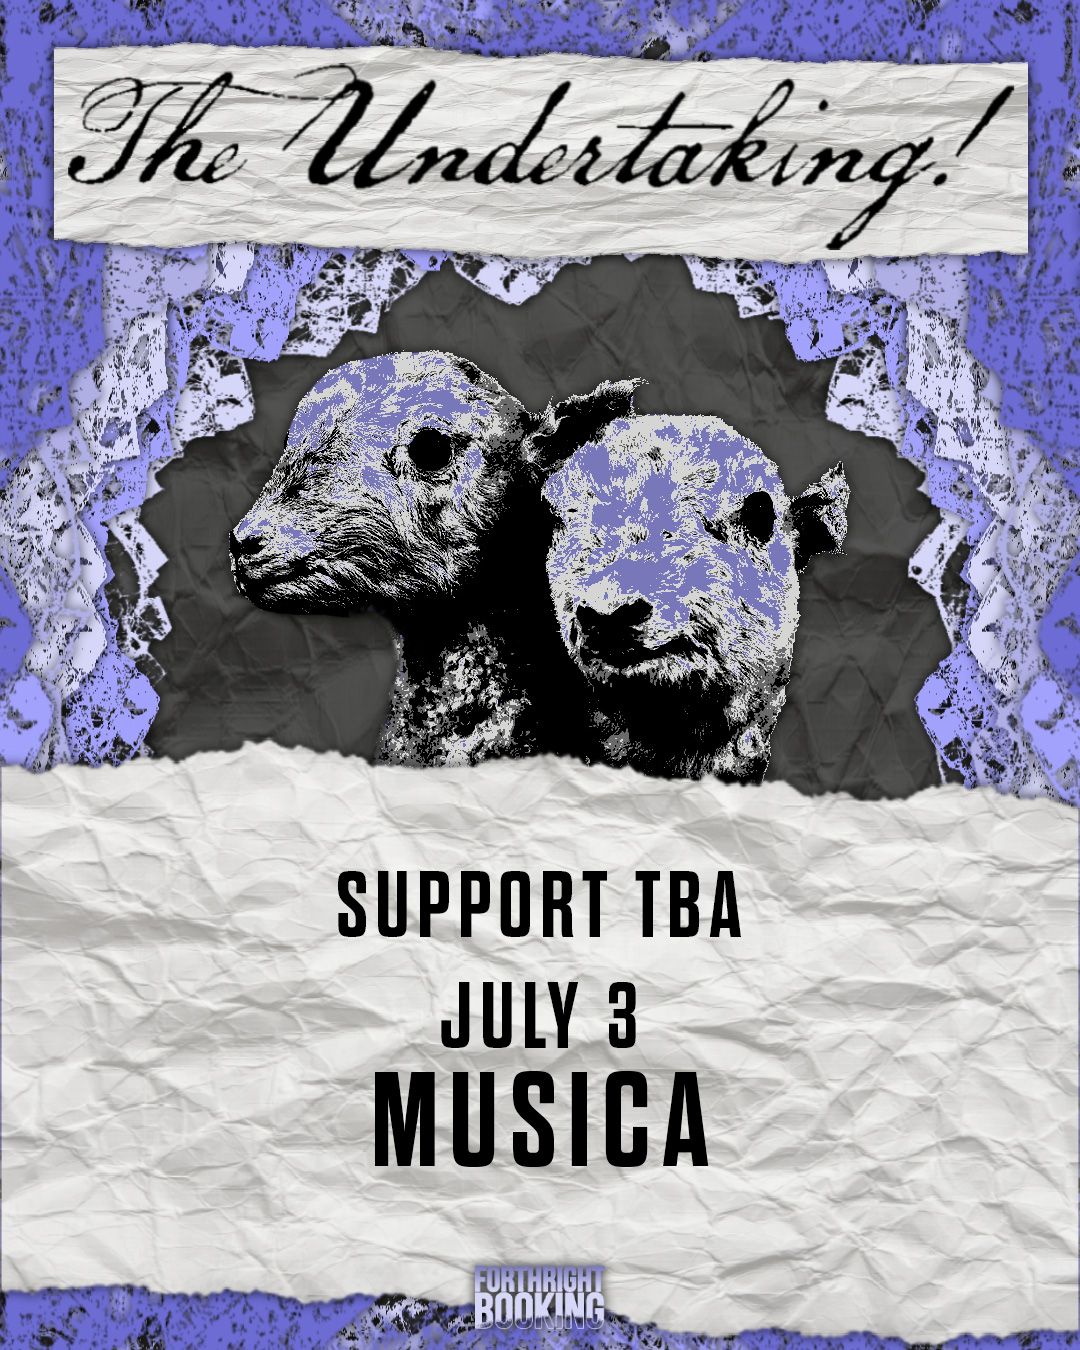 The Undertaking! at Musica